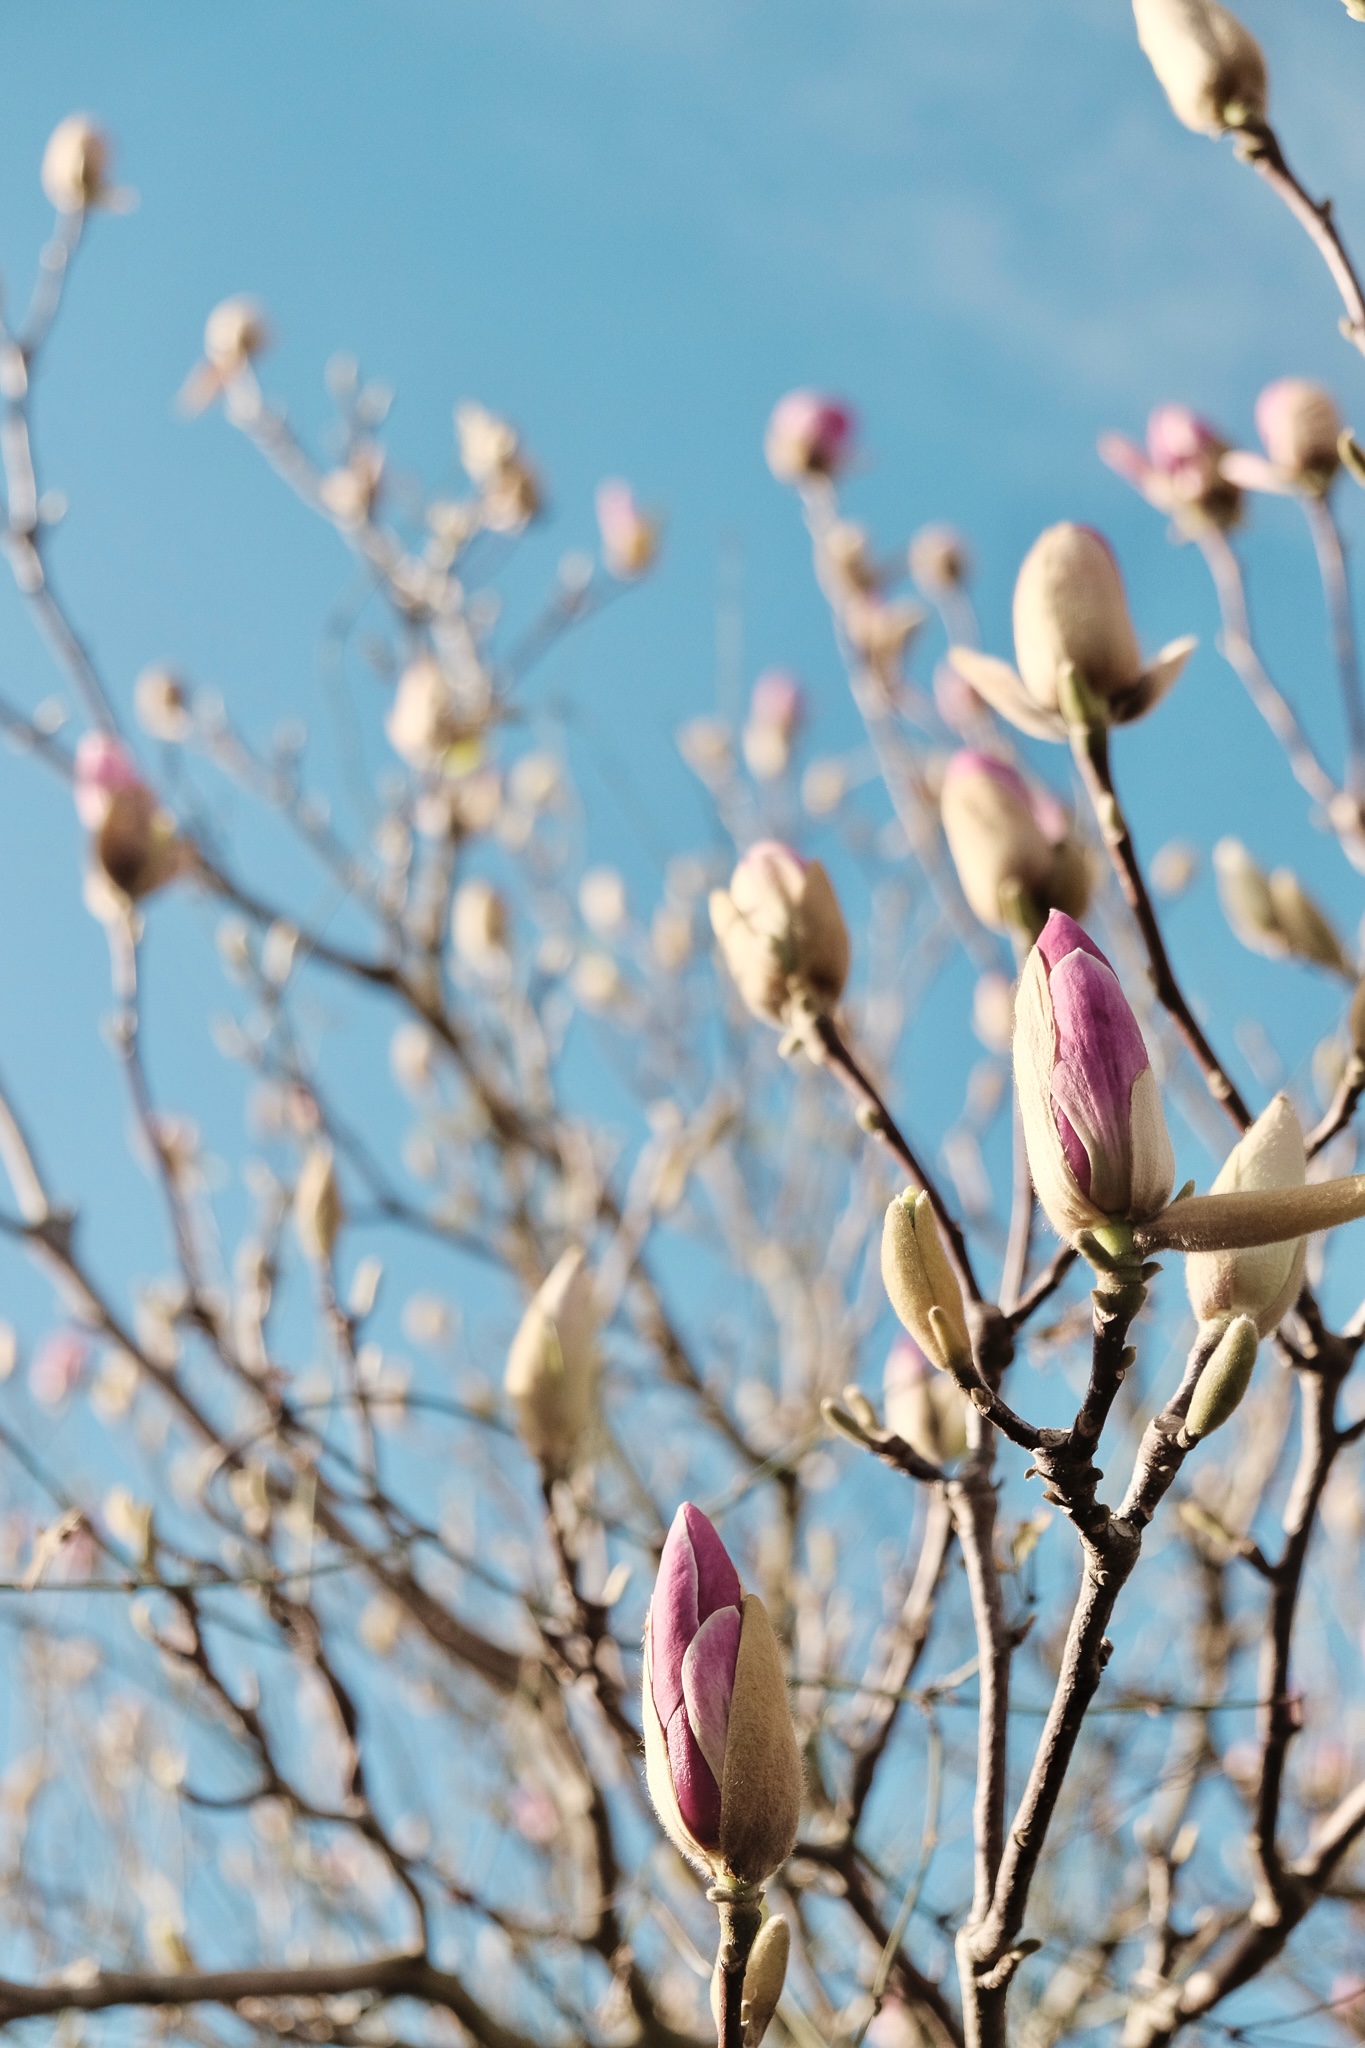 Purple magnolia buds against a blue sky